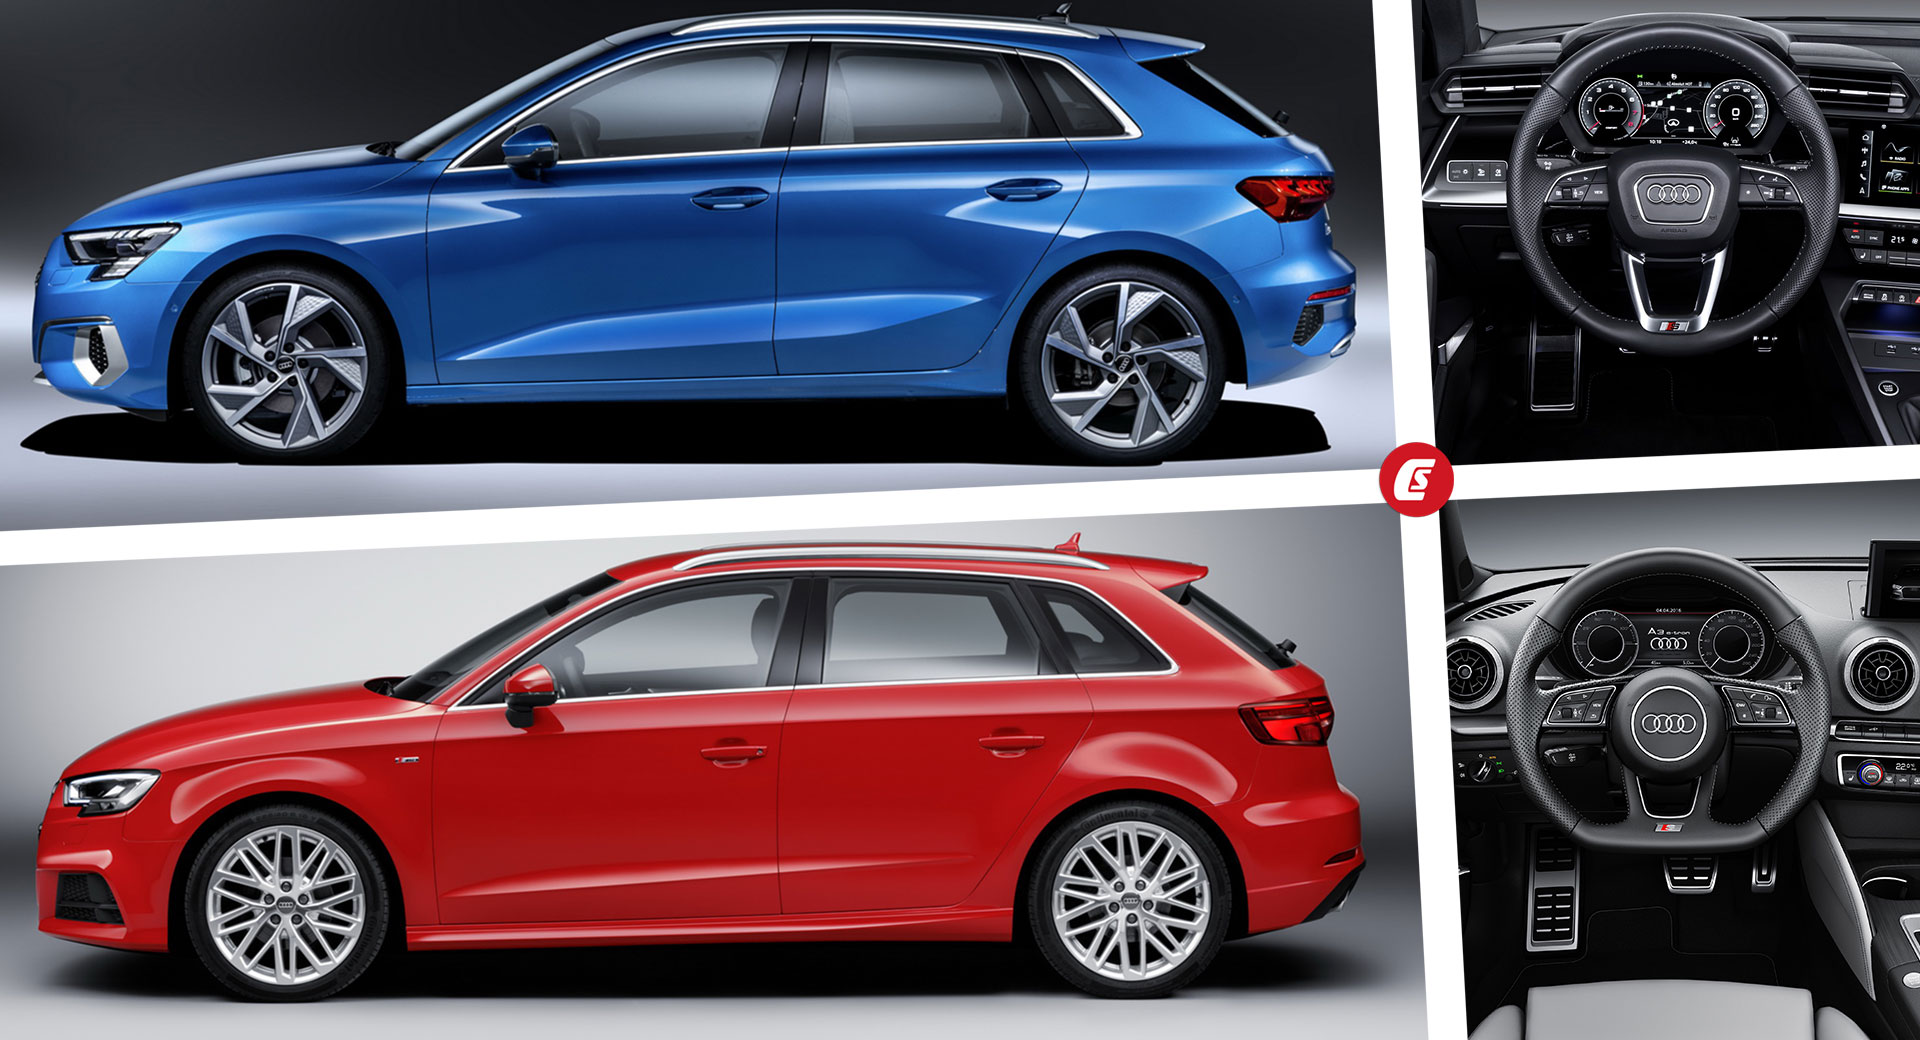 https://www.carscoops.com/wp-content/uploads/2020/03/Audi-A3-Mk3-vs-Mk4-CarScoops.jpg